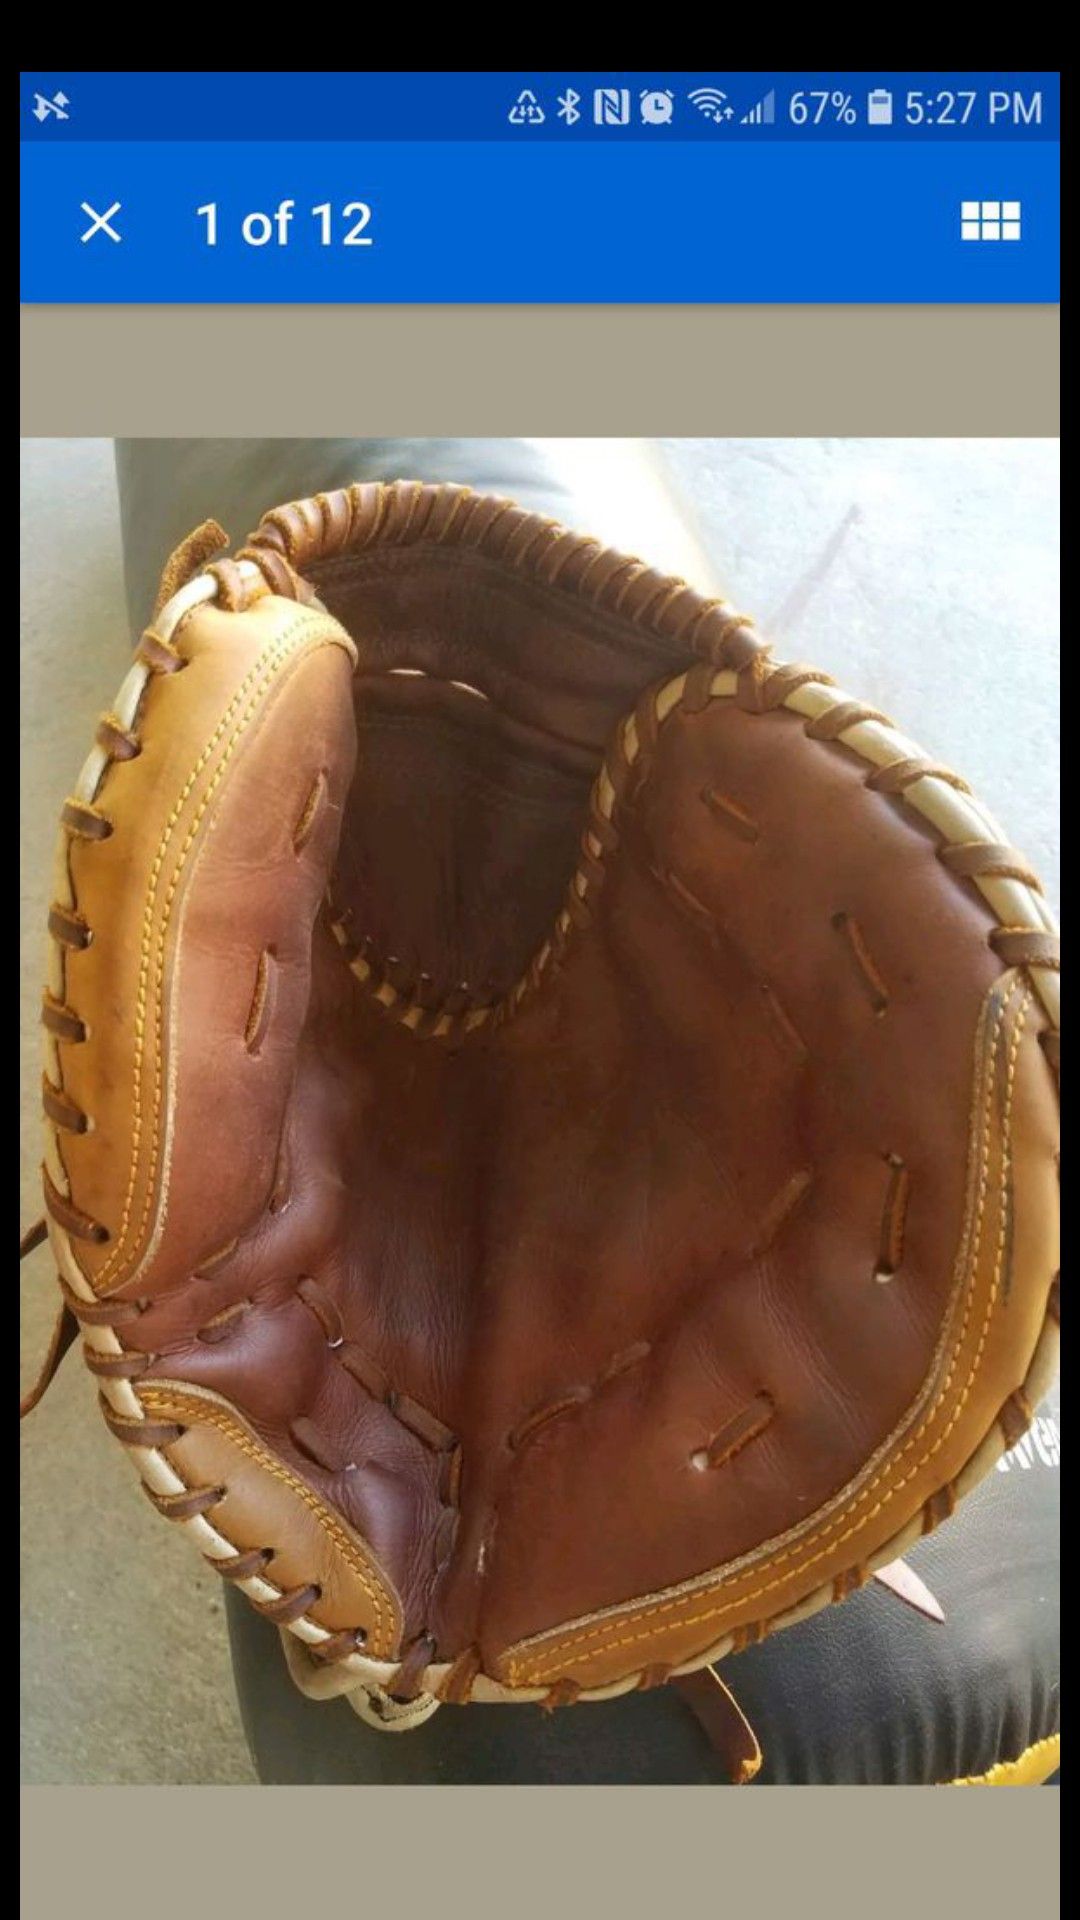 Softball catchers (SOTO) glove, 32"